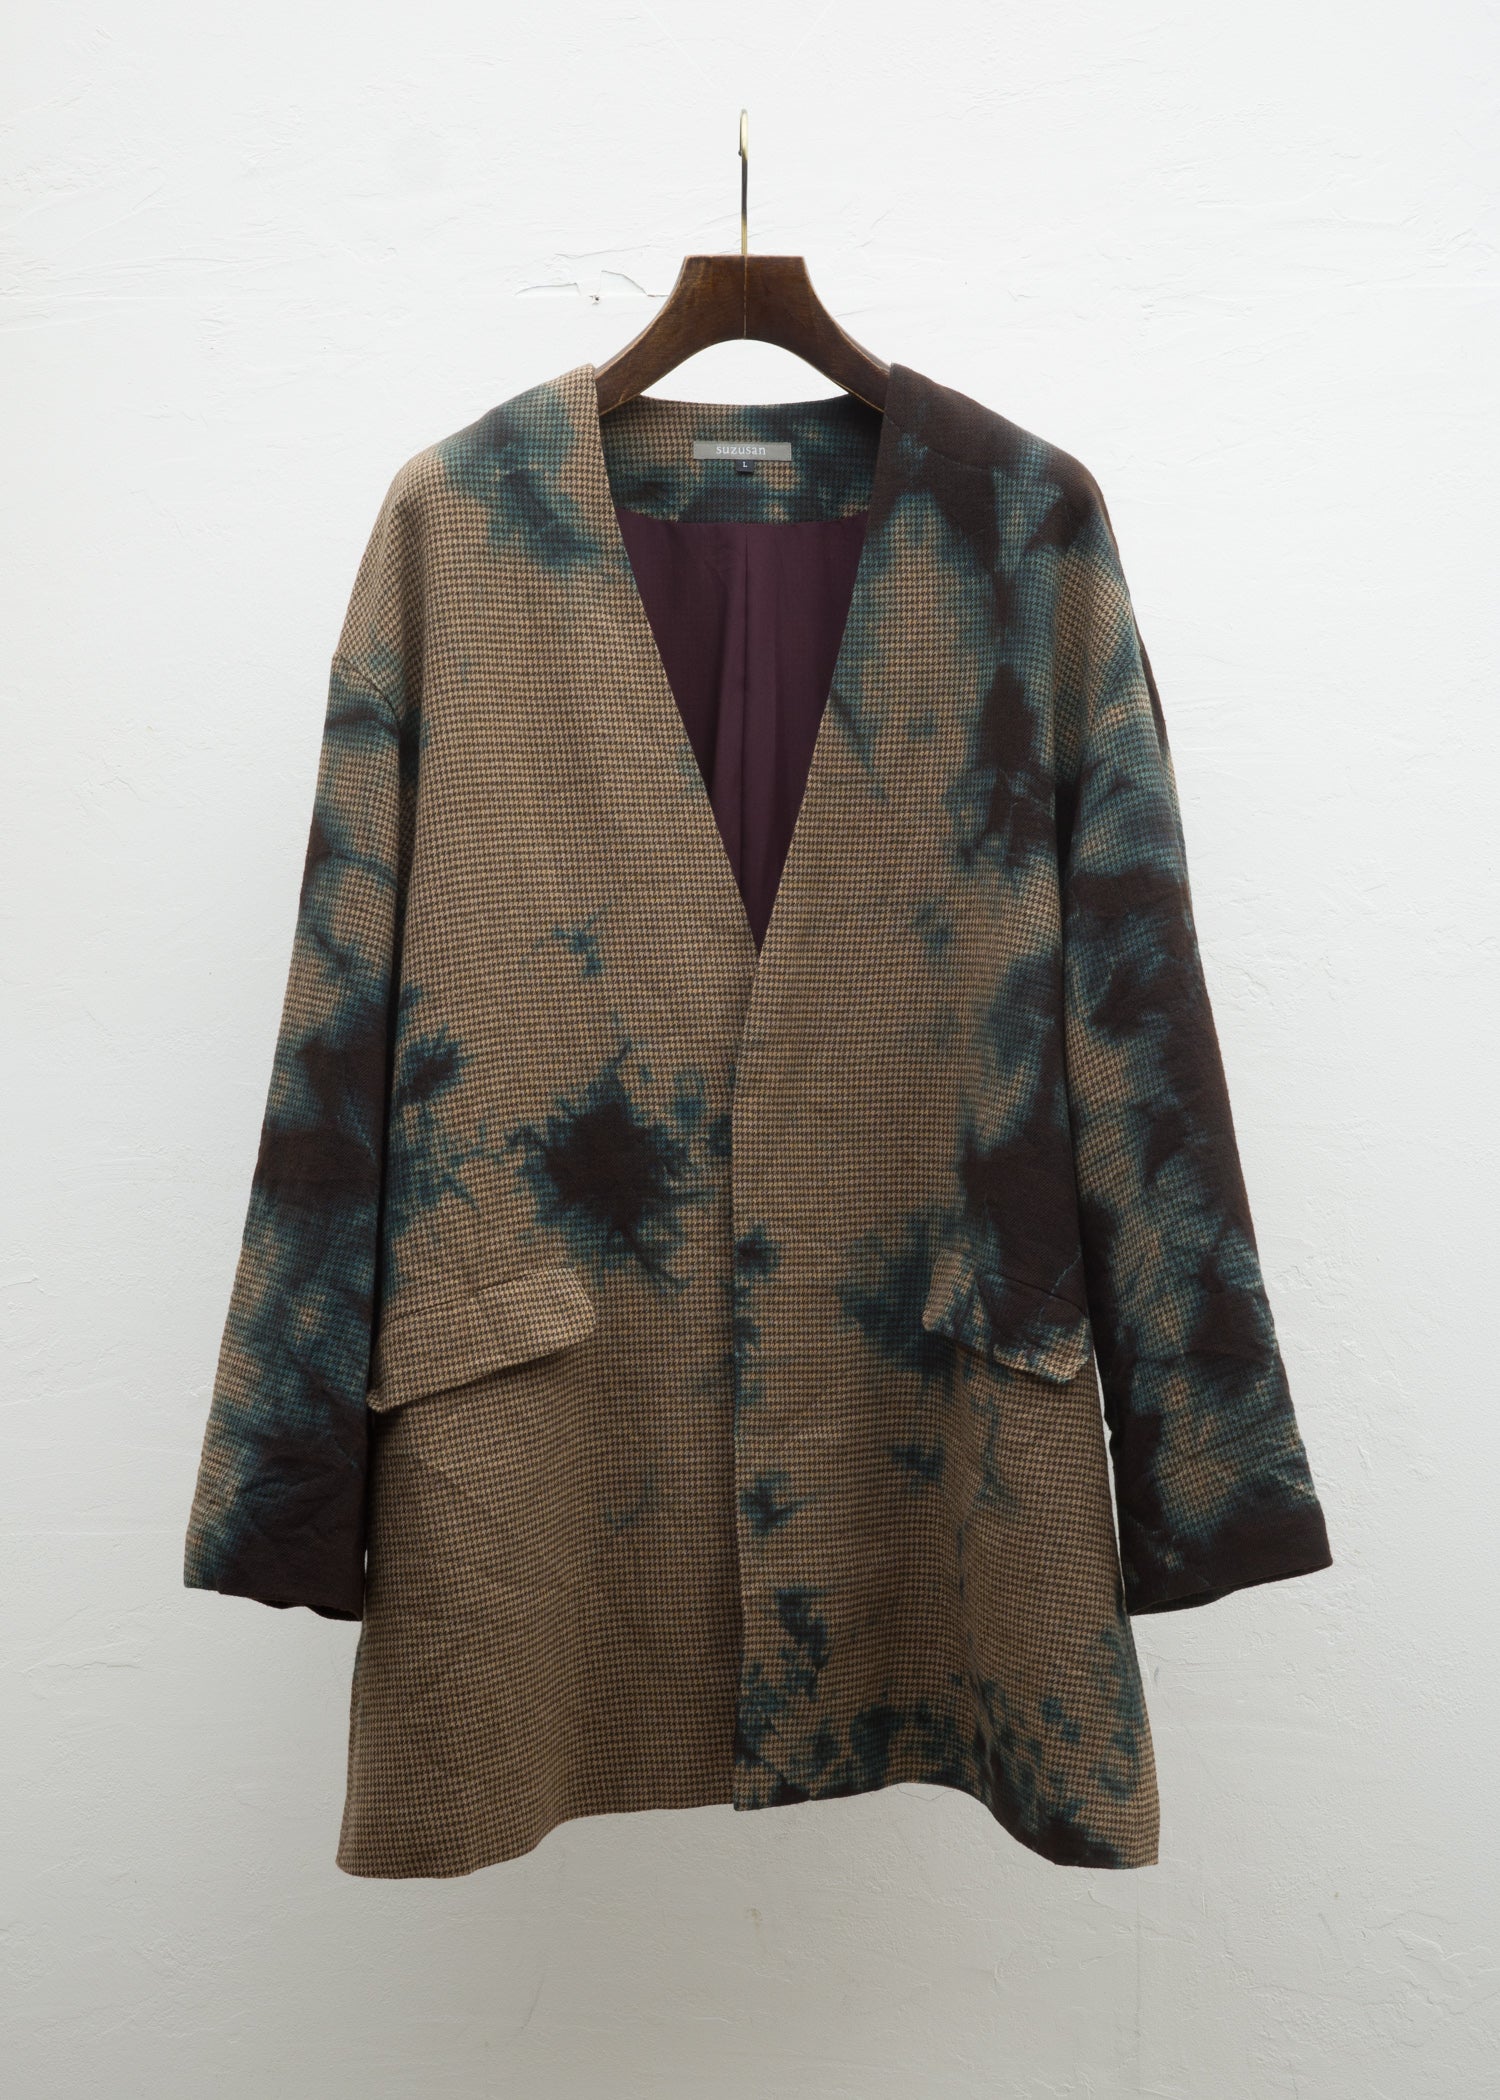 SUZUSAN Merino Wool Houndstooth Collarless Coat